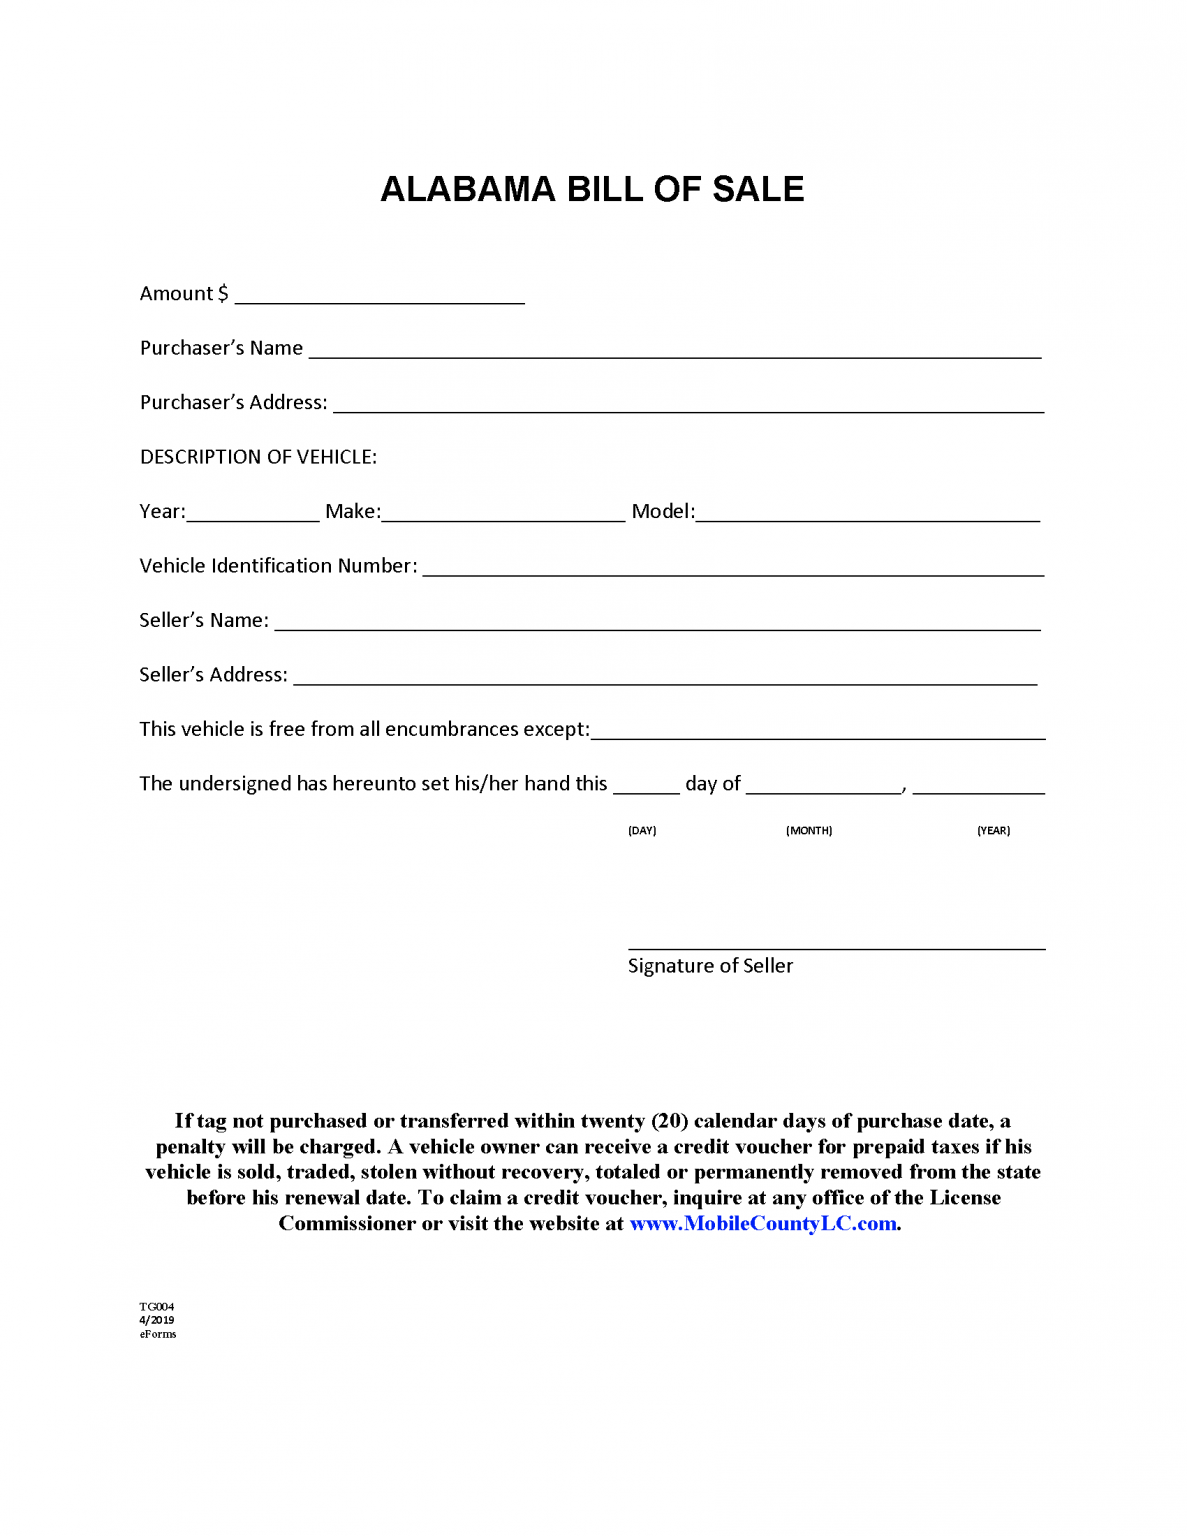 Free Alabama Motor Vehicle Bill of Sale Form - Word | PDF – eForms